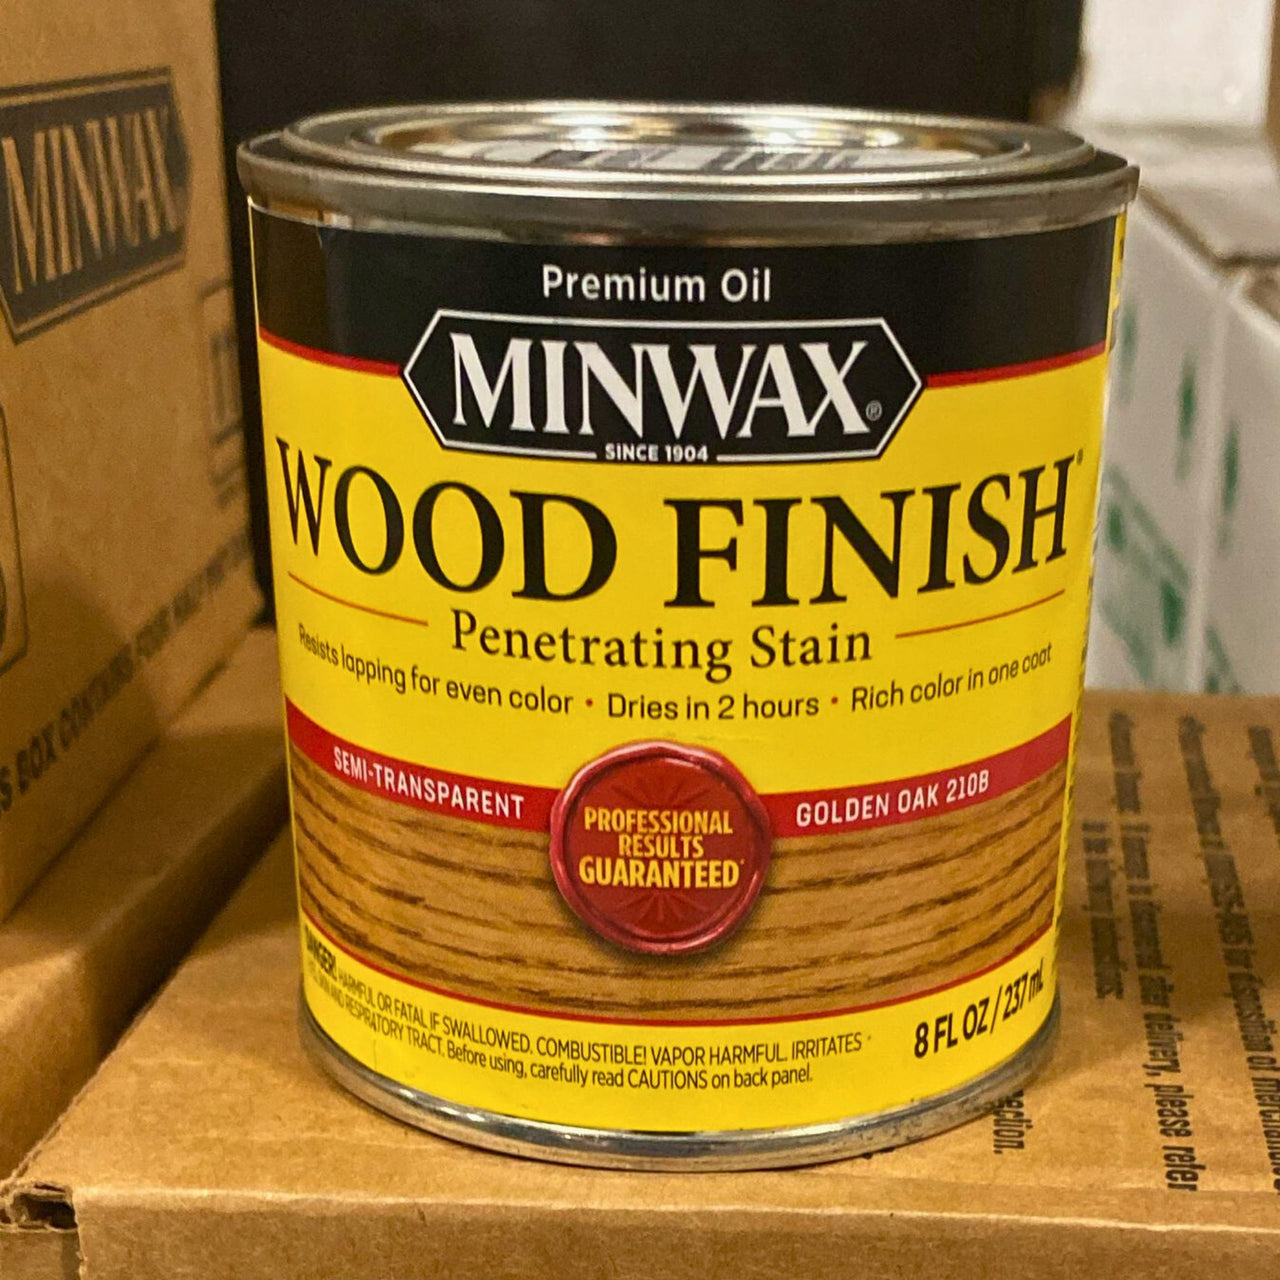 Premium Oil Minwax Wood Finish Penetrating Stain Golden Oak 